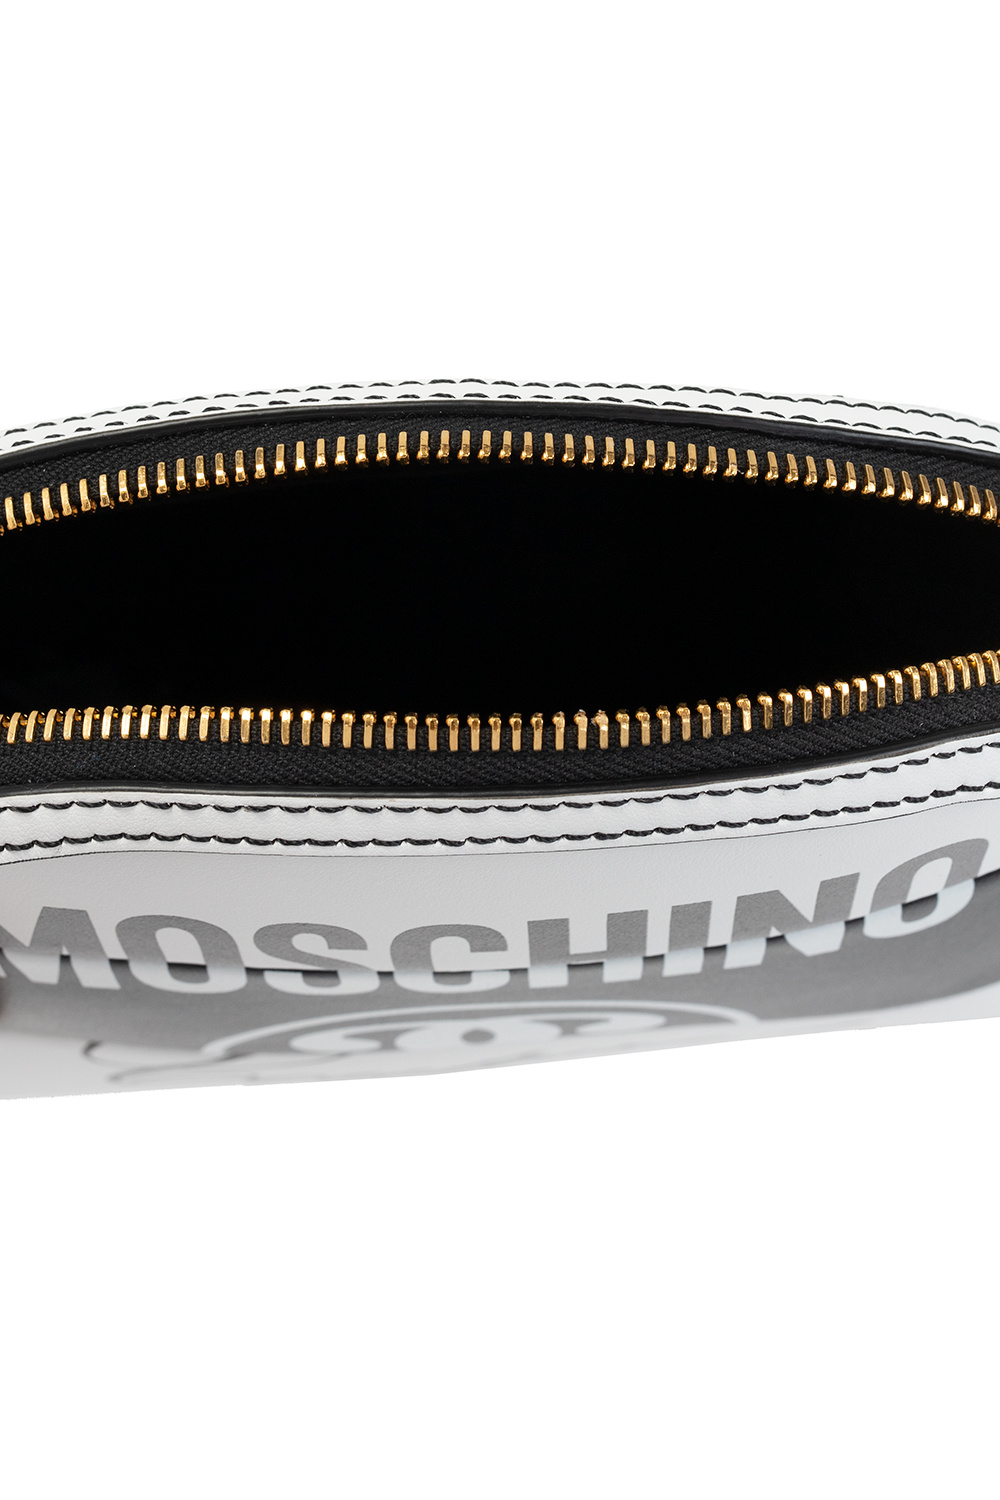 Moschino double zip make up bag